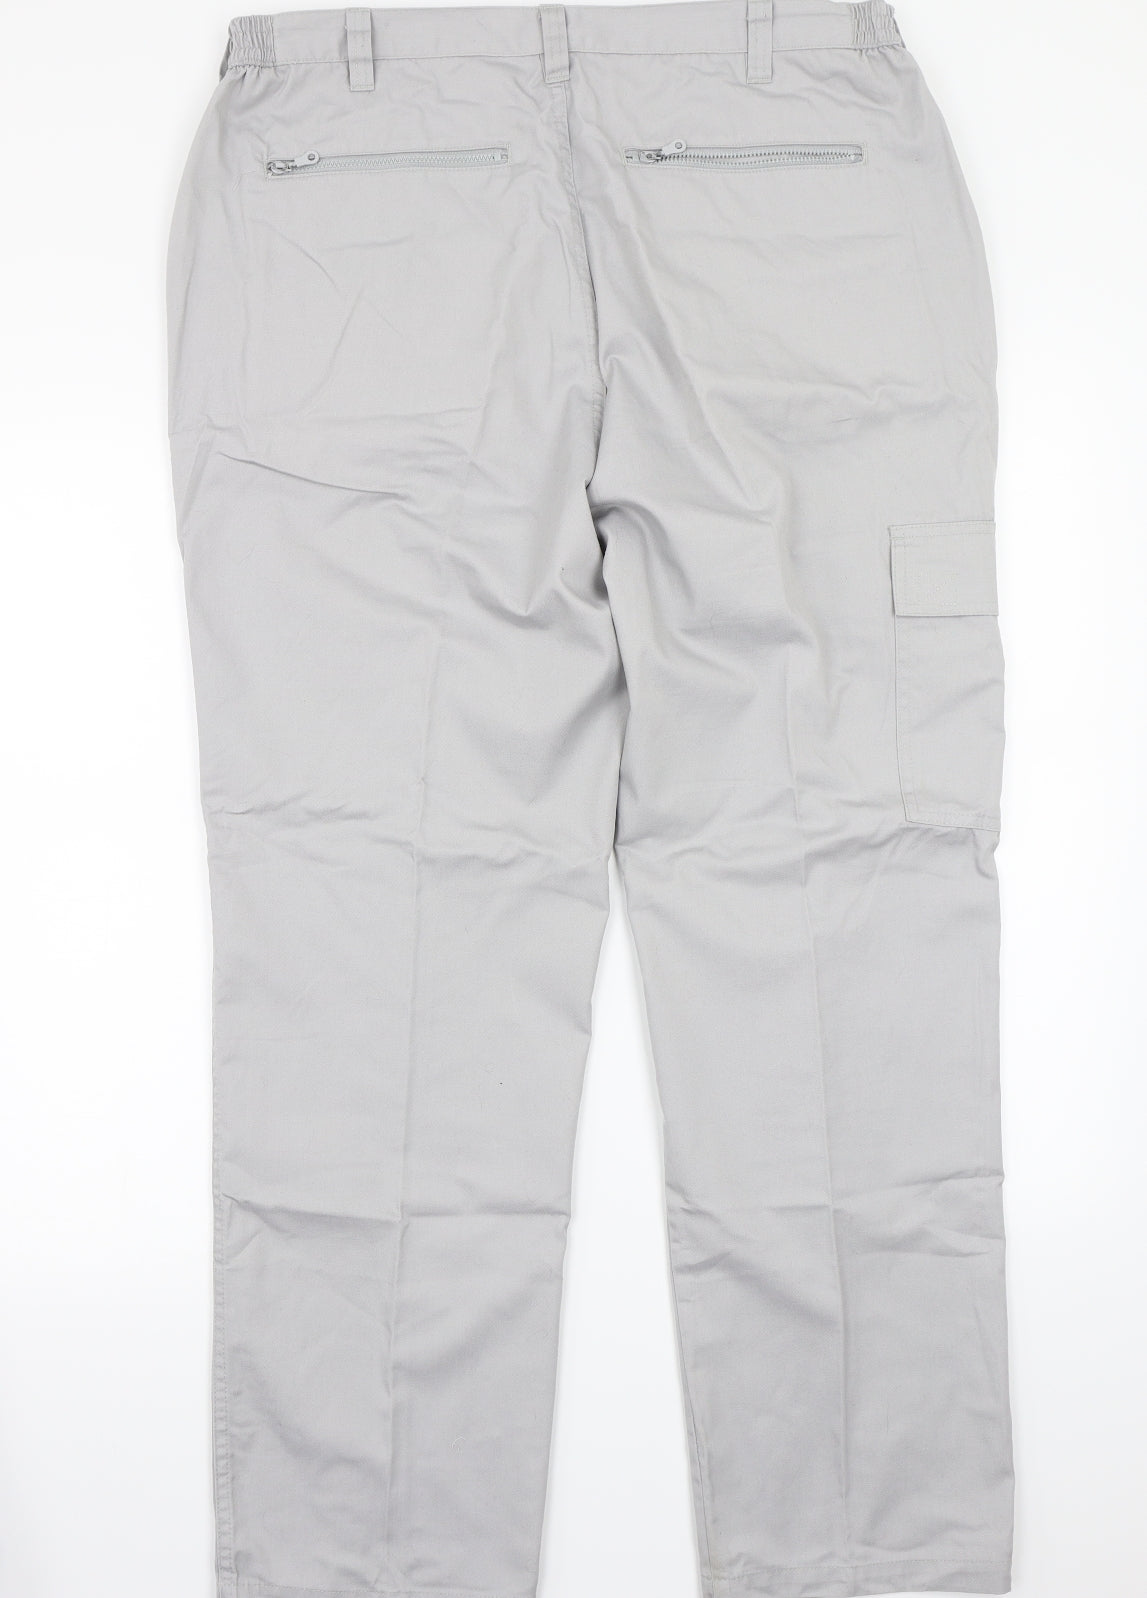 Cargo Pants Pdf Sewing Pattern for Men Sizes 44 / 46 / 48 RU Model No. 950  - Etsy